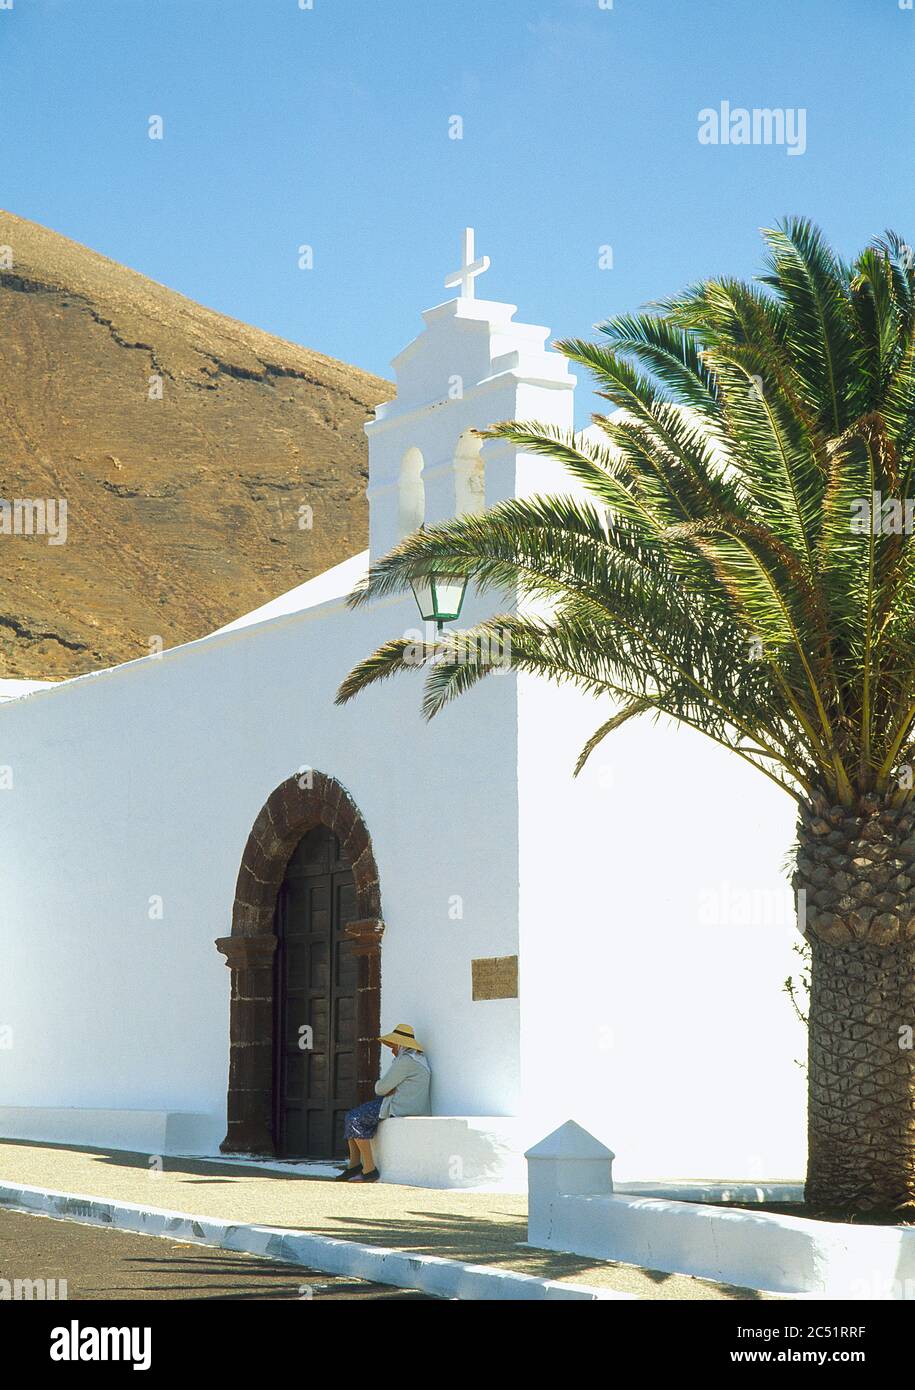 San Marcial del Rubicon church. Femes, Lanzarote island, Canary Islands, Spain. Stock Photo